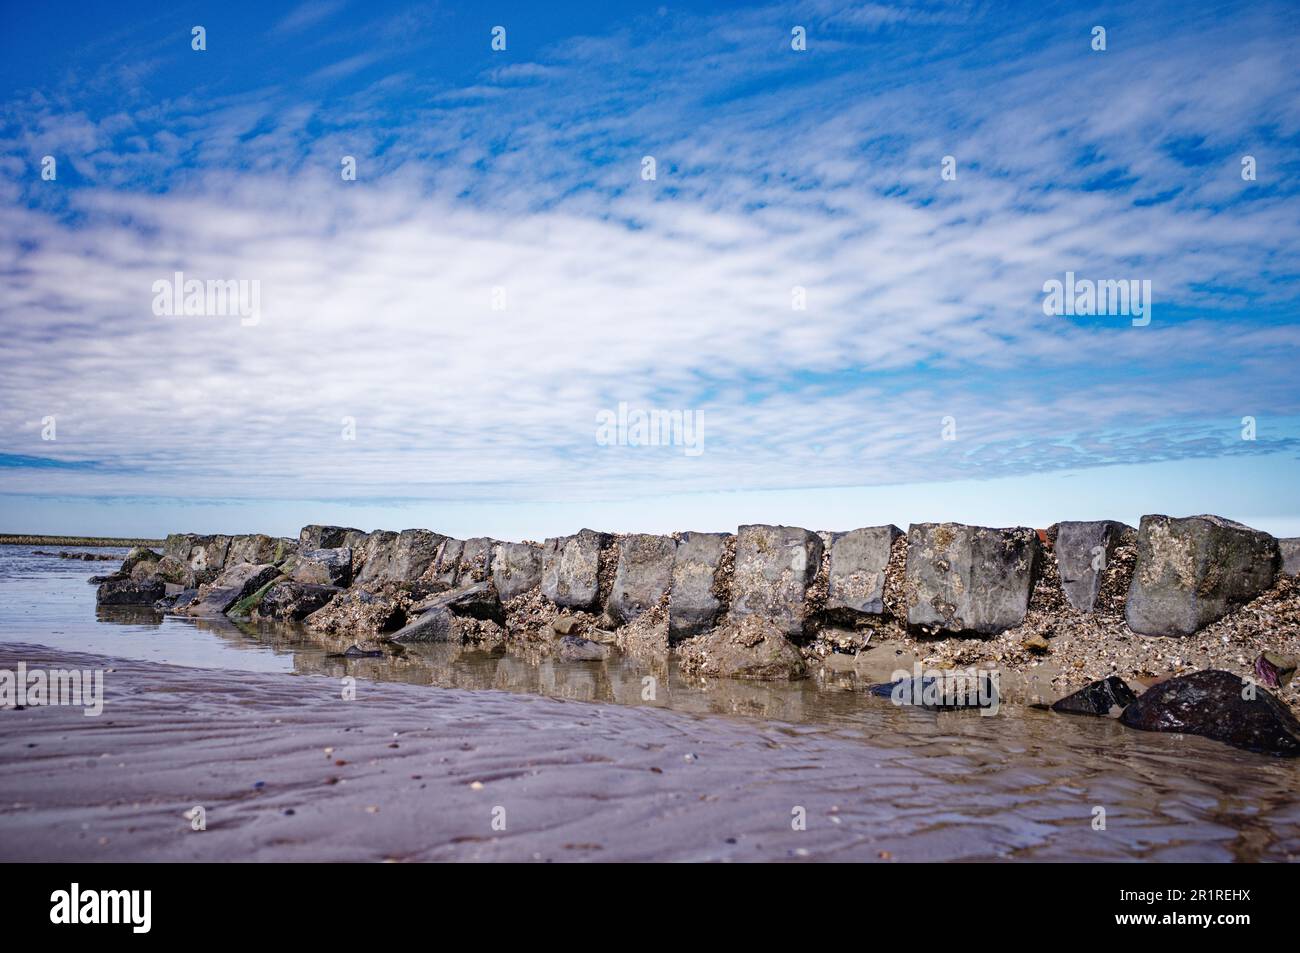 Stone wall on the beach, Baltrum, East Frisia, Lower Saxony, Germany Stock Photo